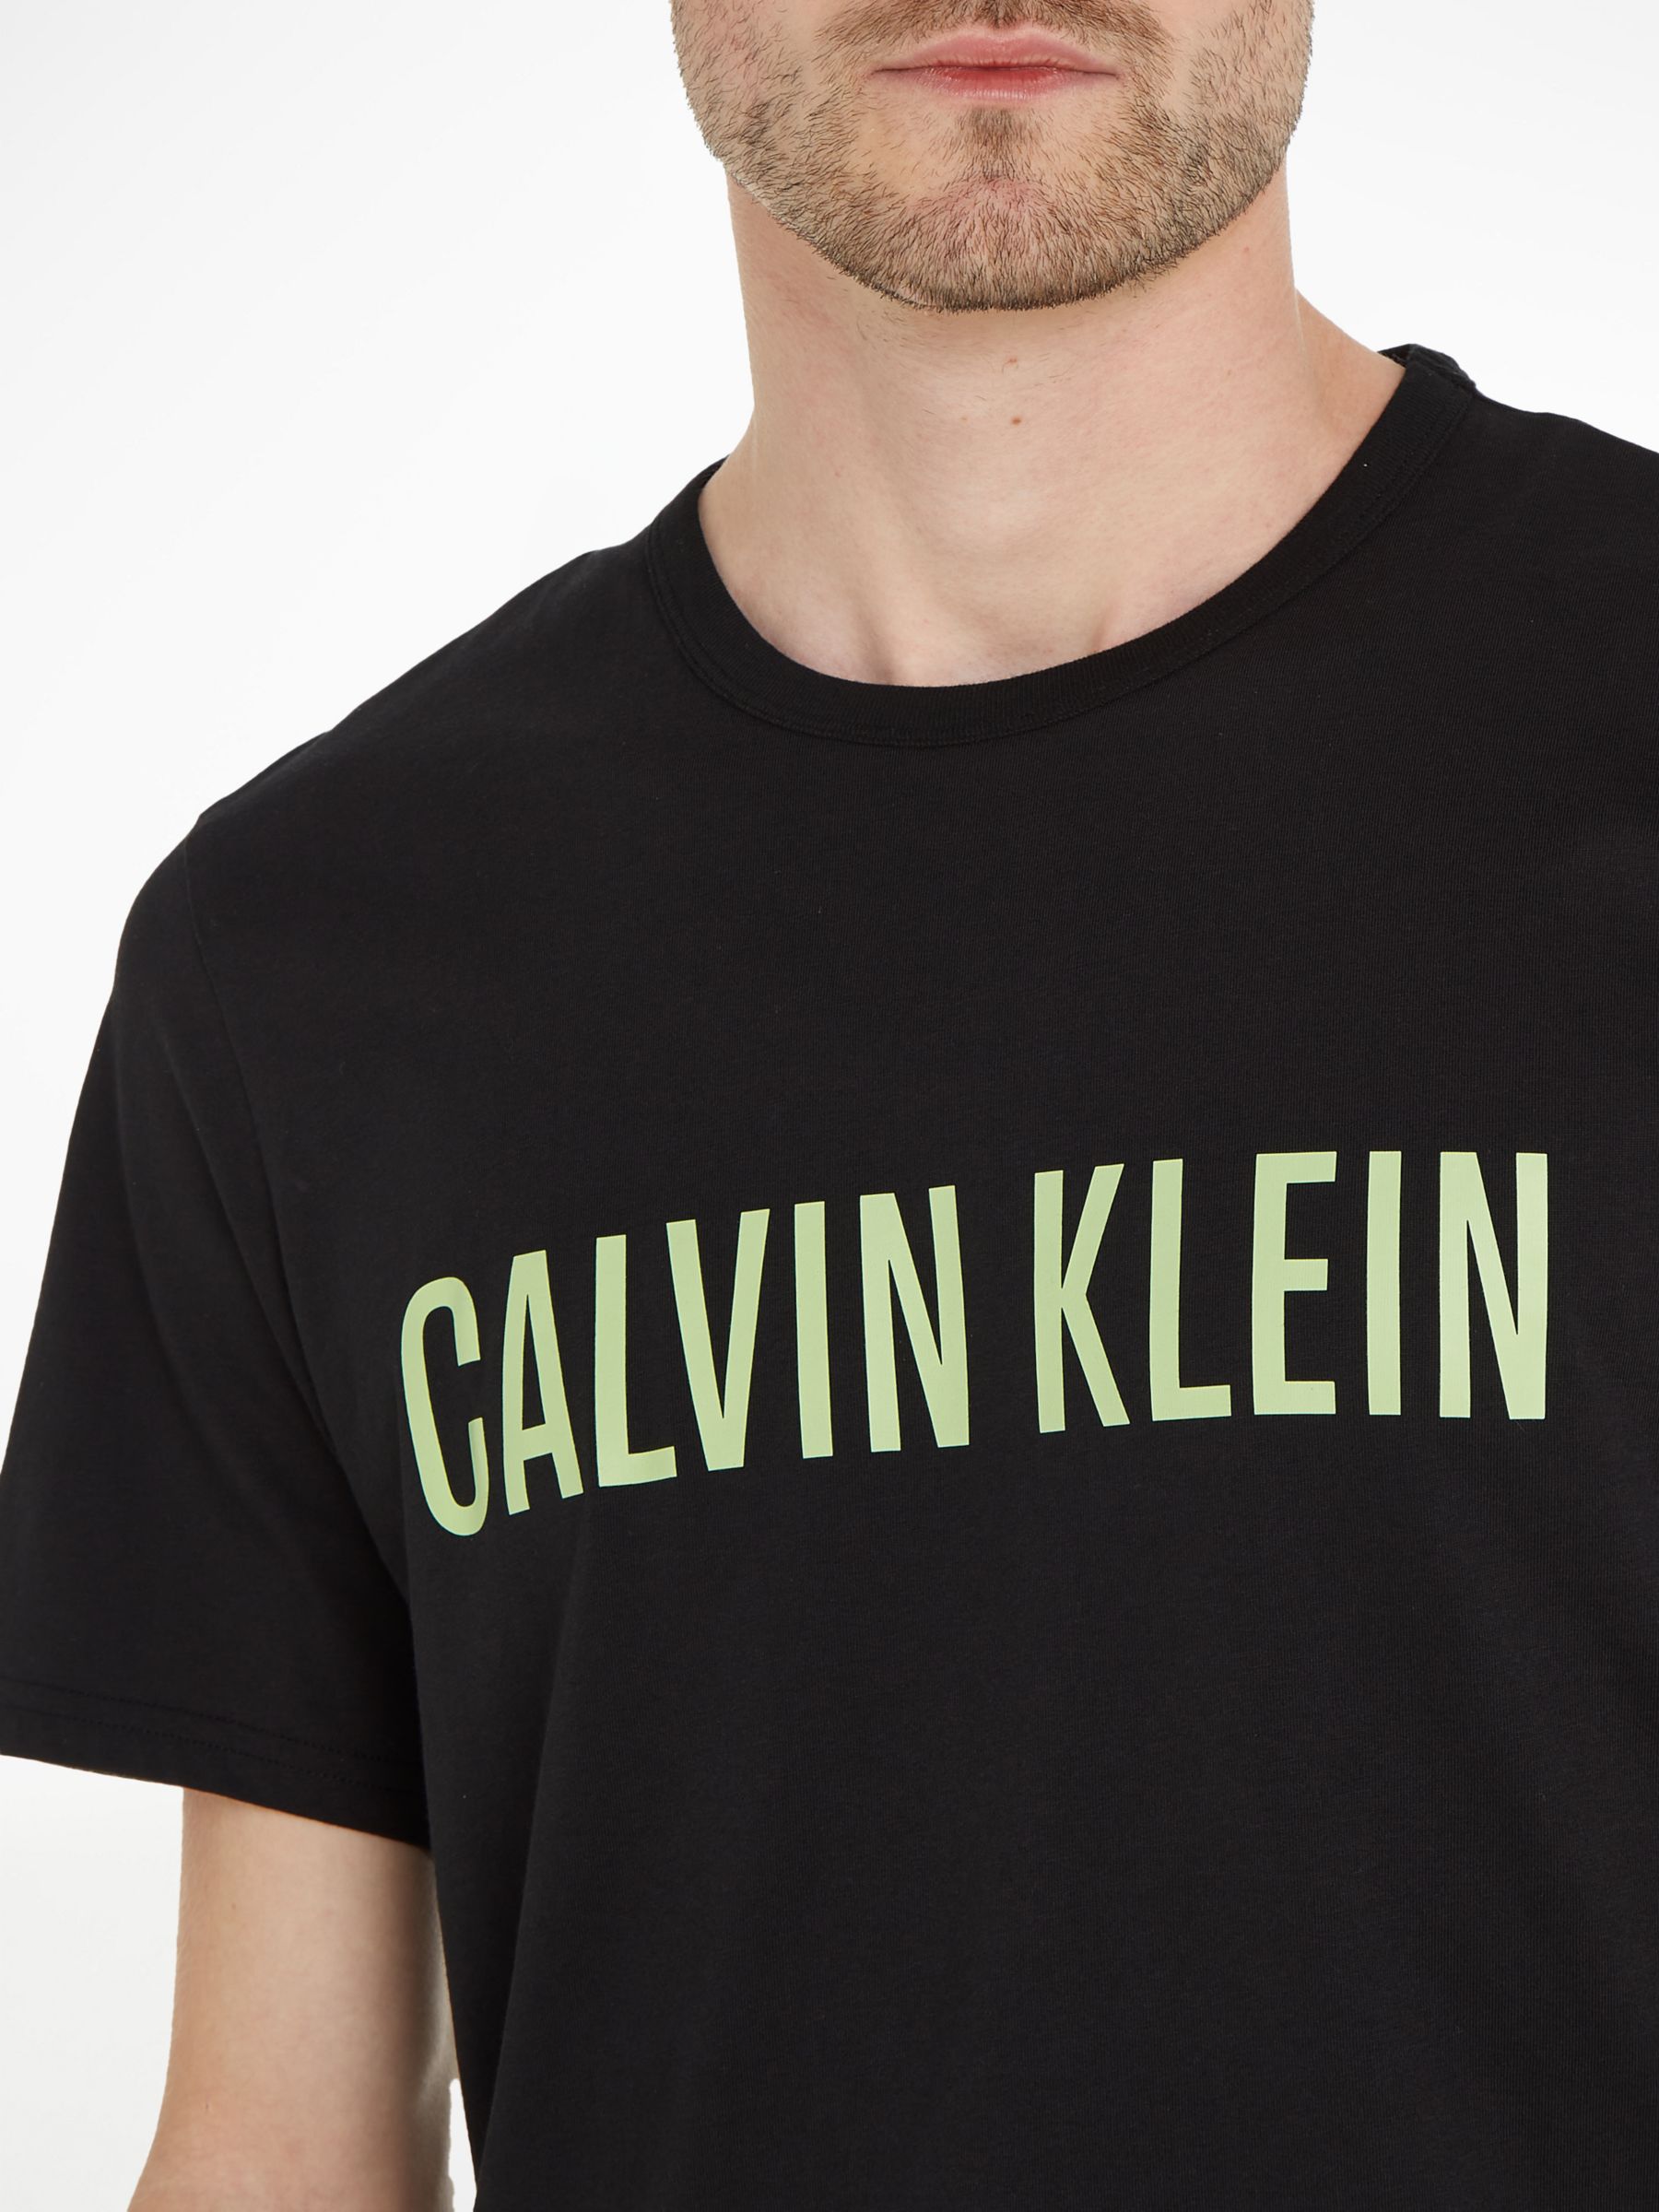 Calvin Klein Intense Power Lounge T-Shirt, Black/Tropic Lime, S